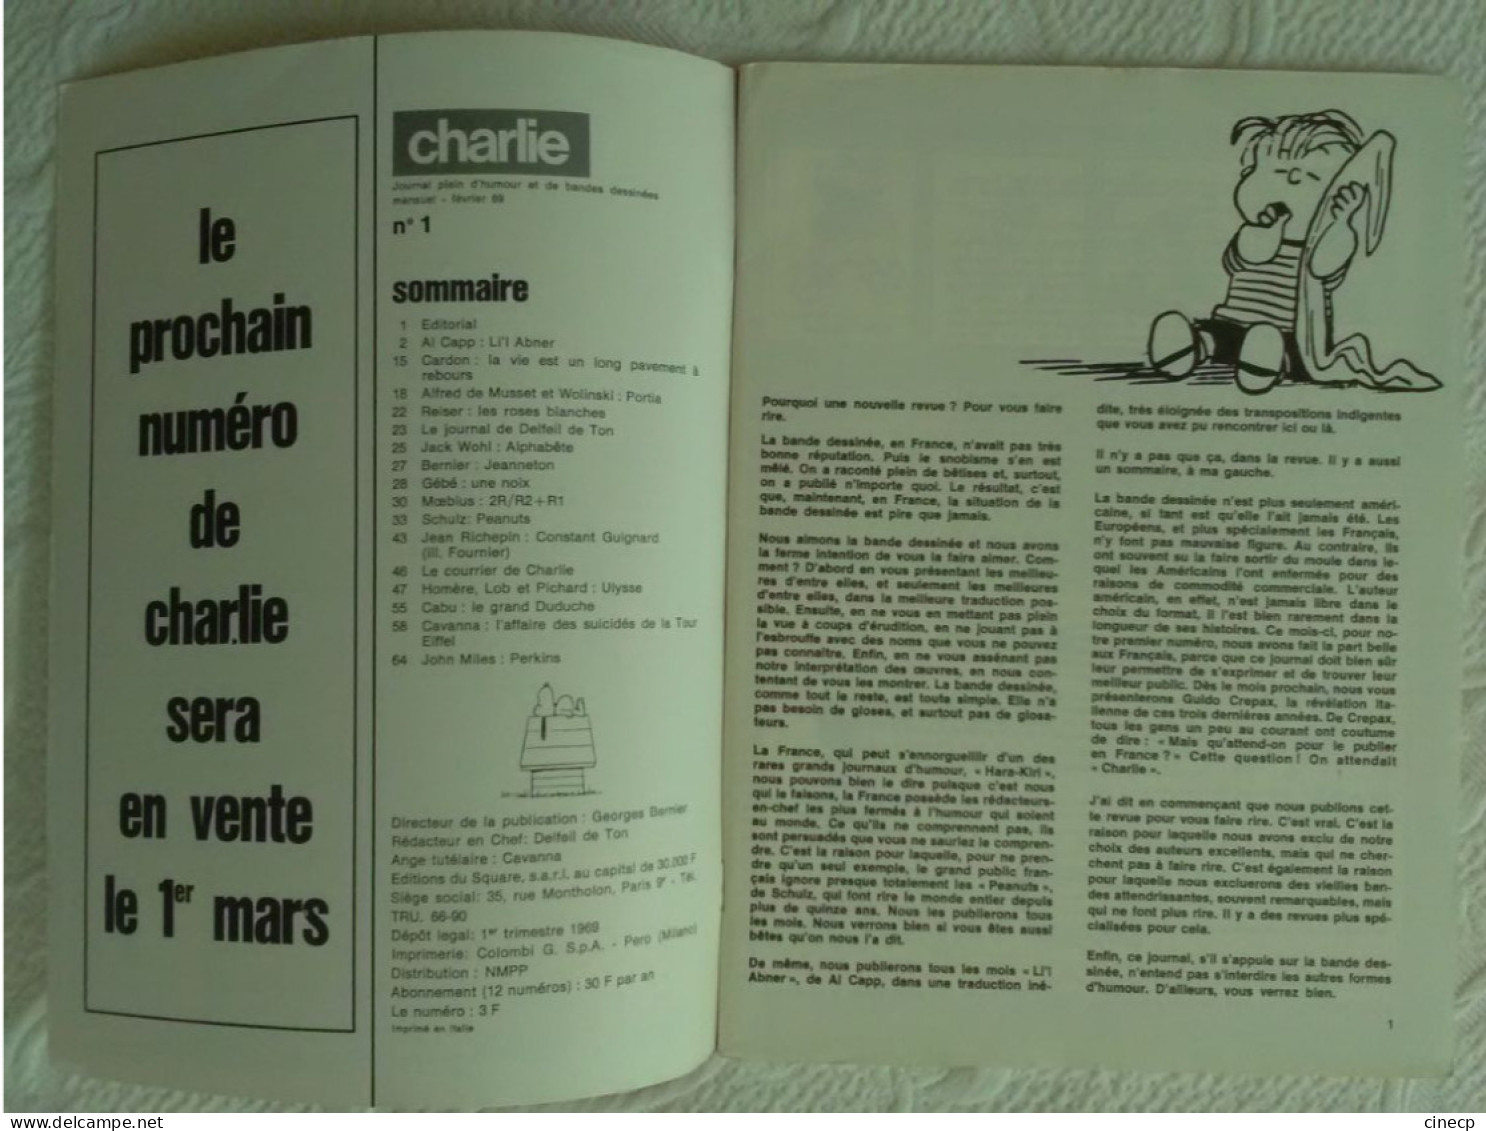 CHARLIE N°1 Illustrateur Dessinateur Wolinski Reiser Moebius Cabu Schulz... Humour Erotisme Février 1969 - Humor